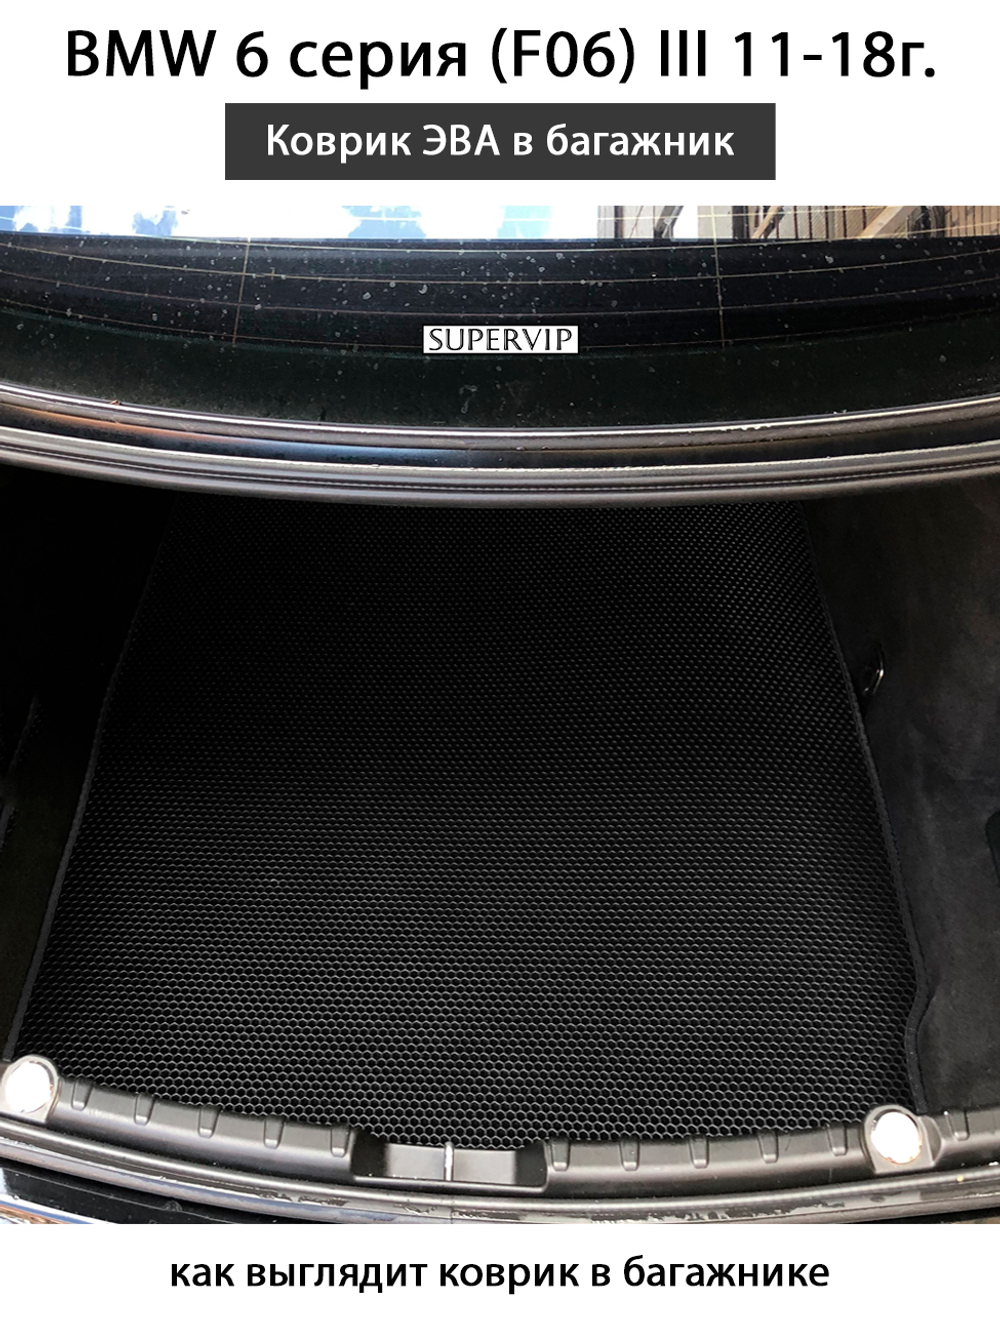 коврик ева в багажник авто для BMW 6 серия III (F06) от supervip